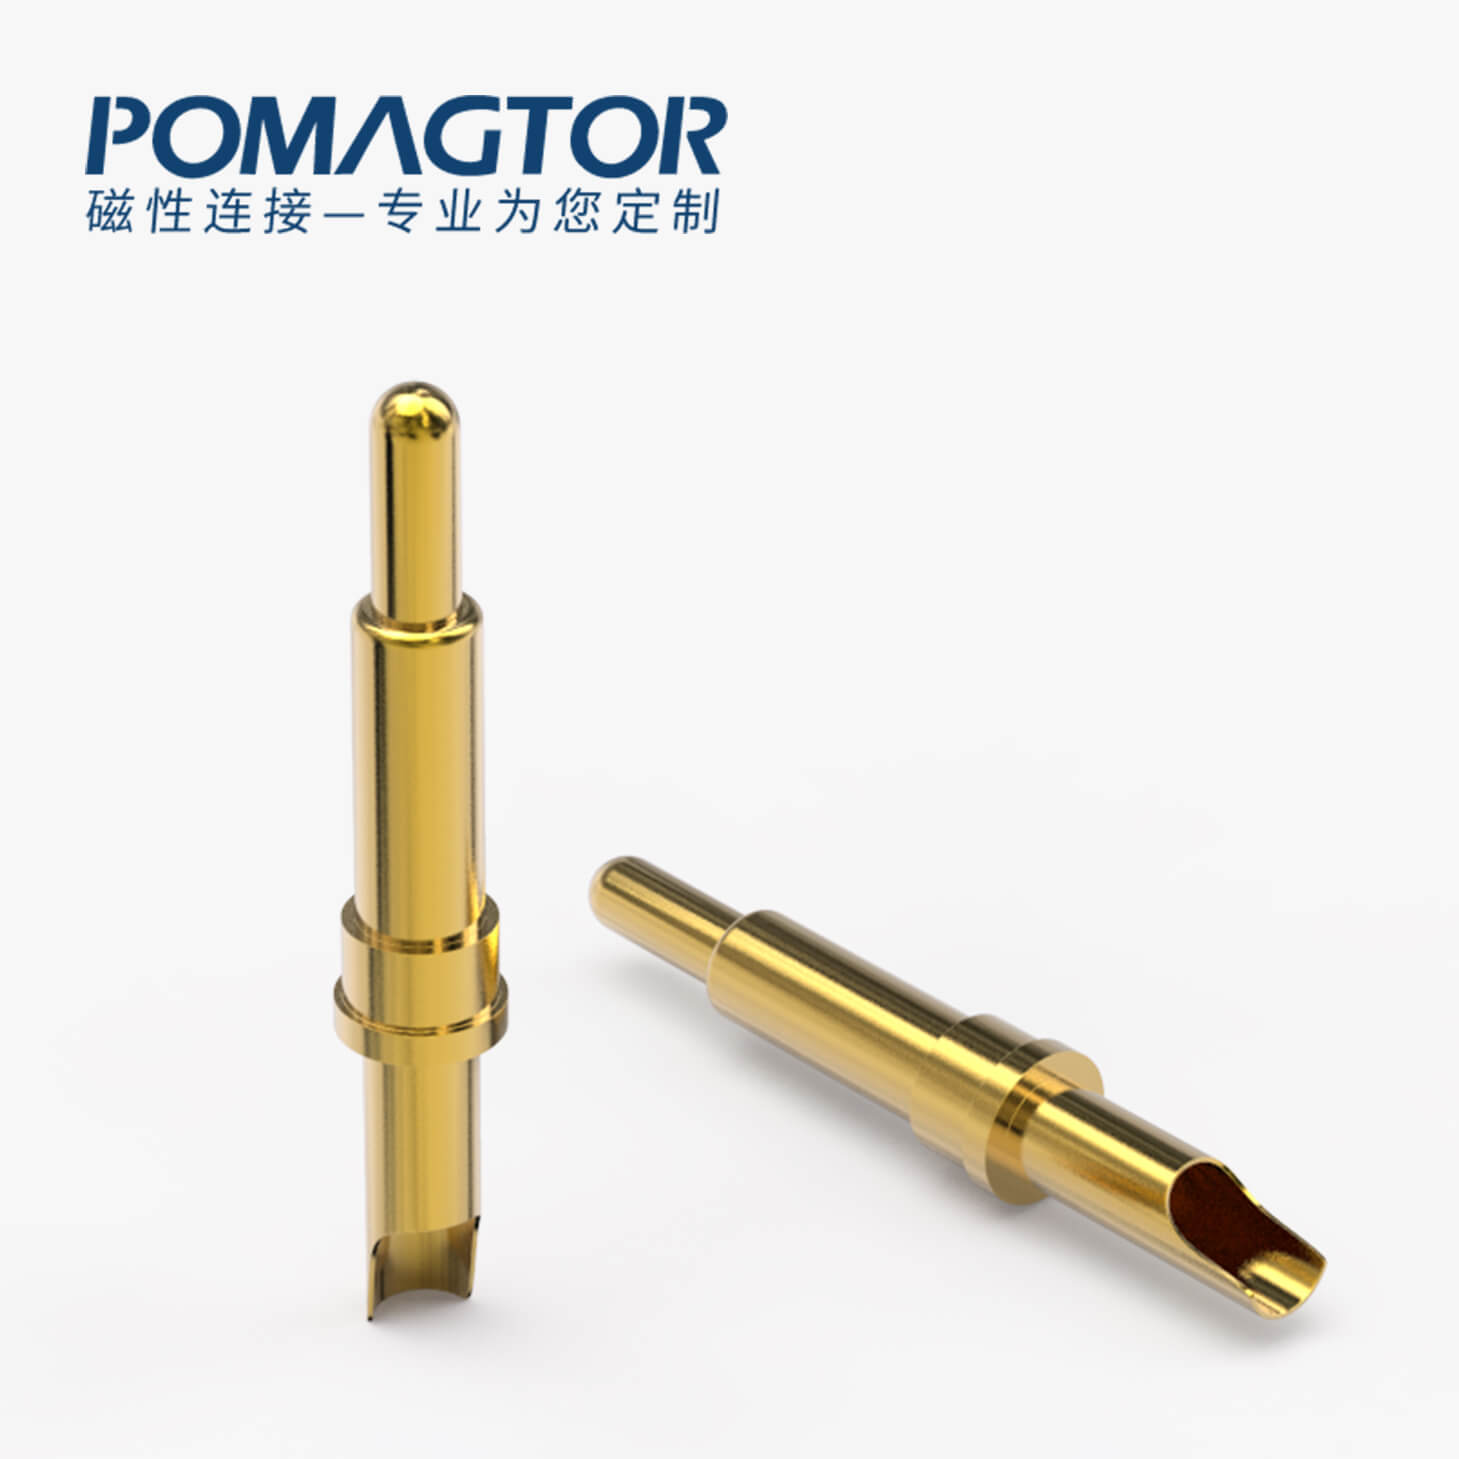 POGO PIN 焊线式：电镀黄铜Au3u，电压12V，电流3A，工作行程1.0mm:70±20gf，弹力1000000次+，工作温度-30°~85°